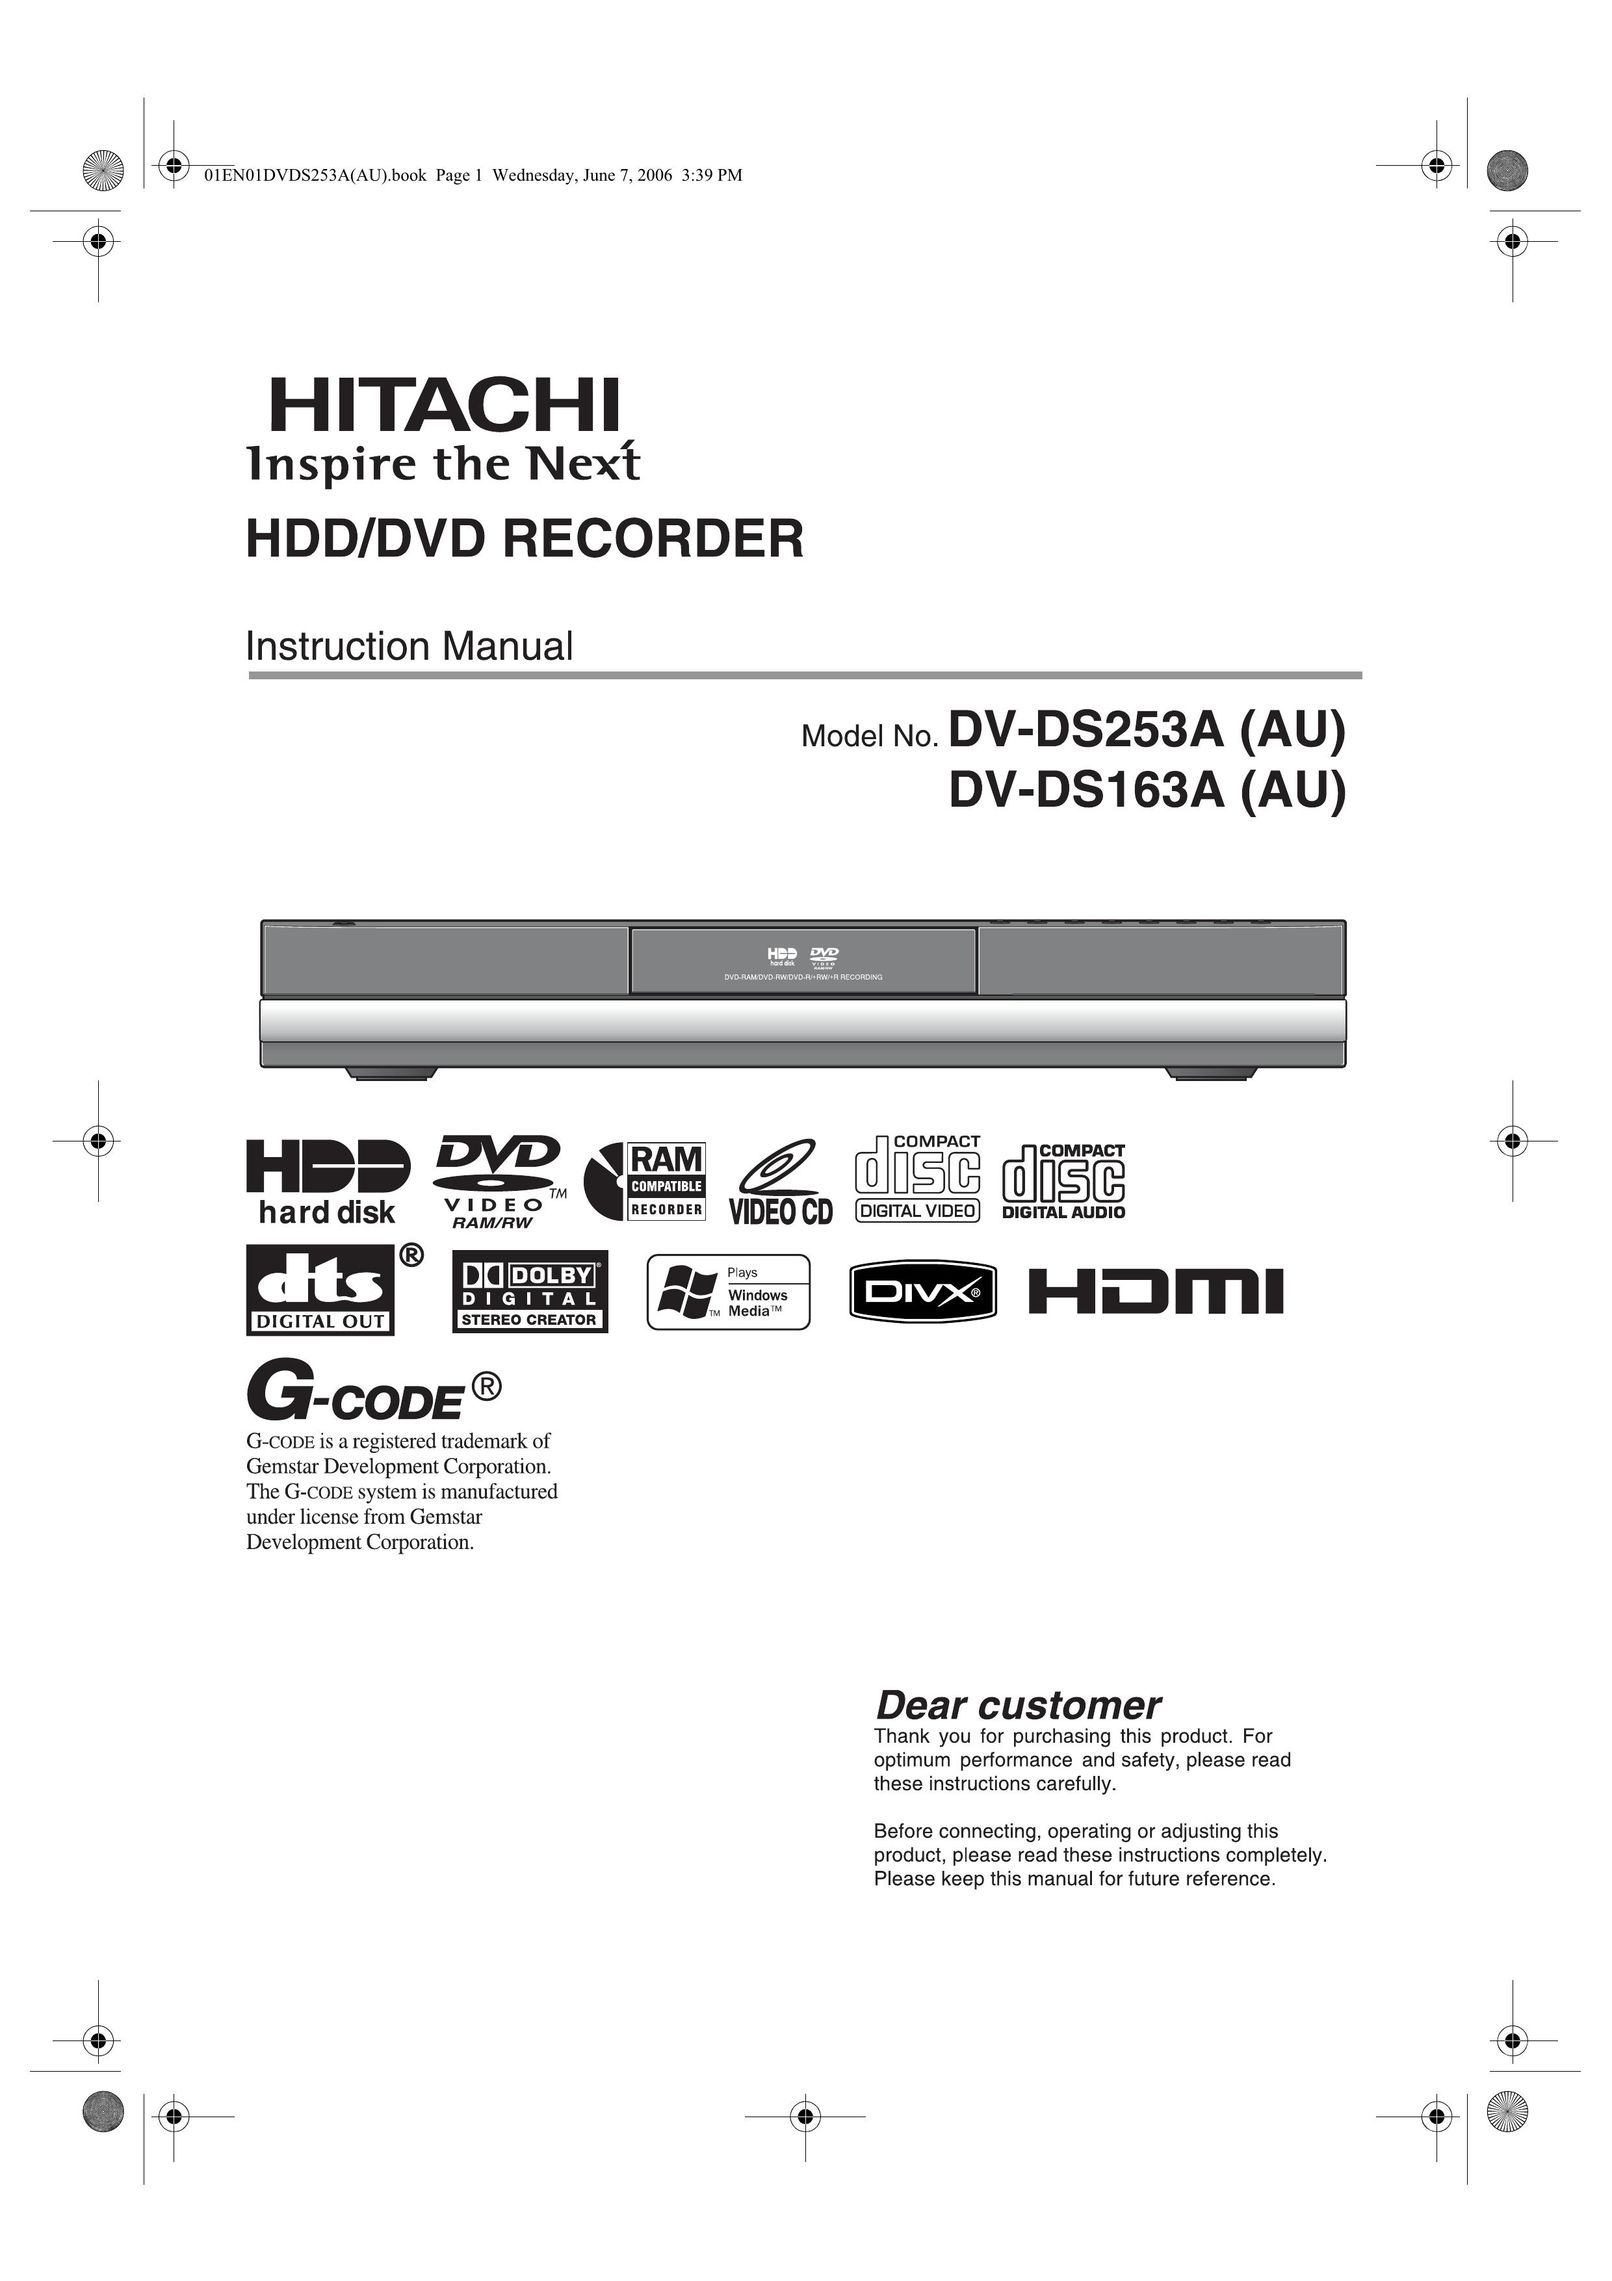 Hitachi DV-DS253A DVR User Manual